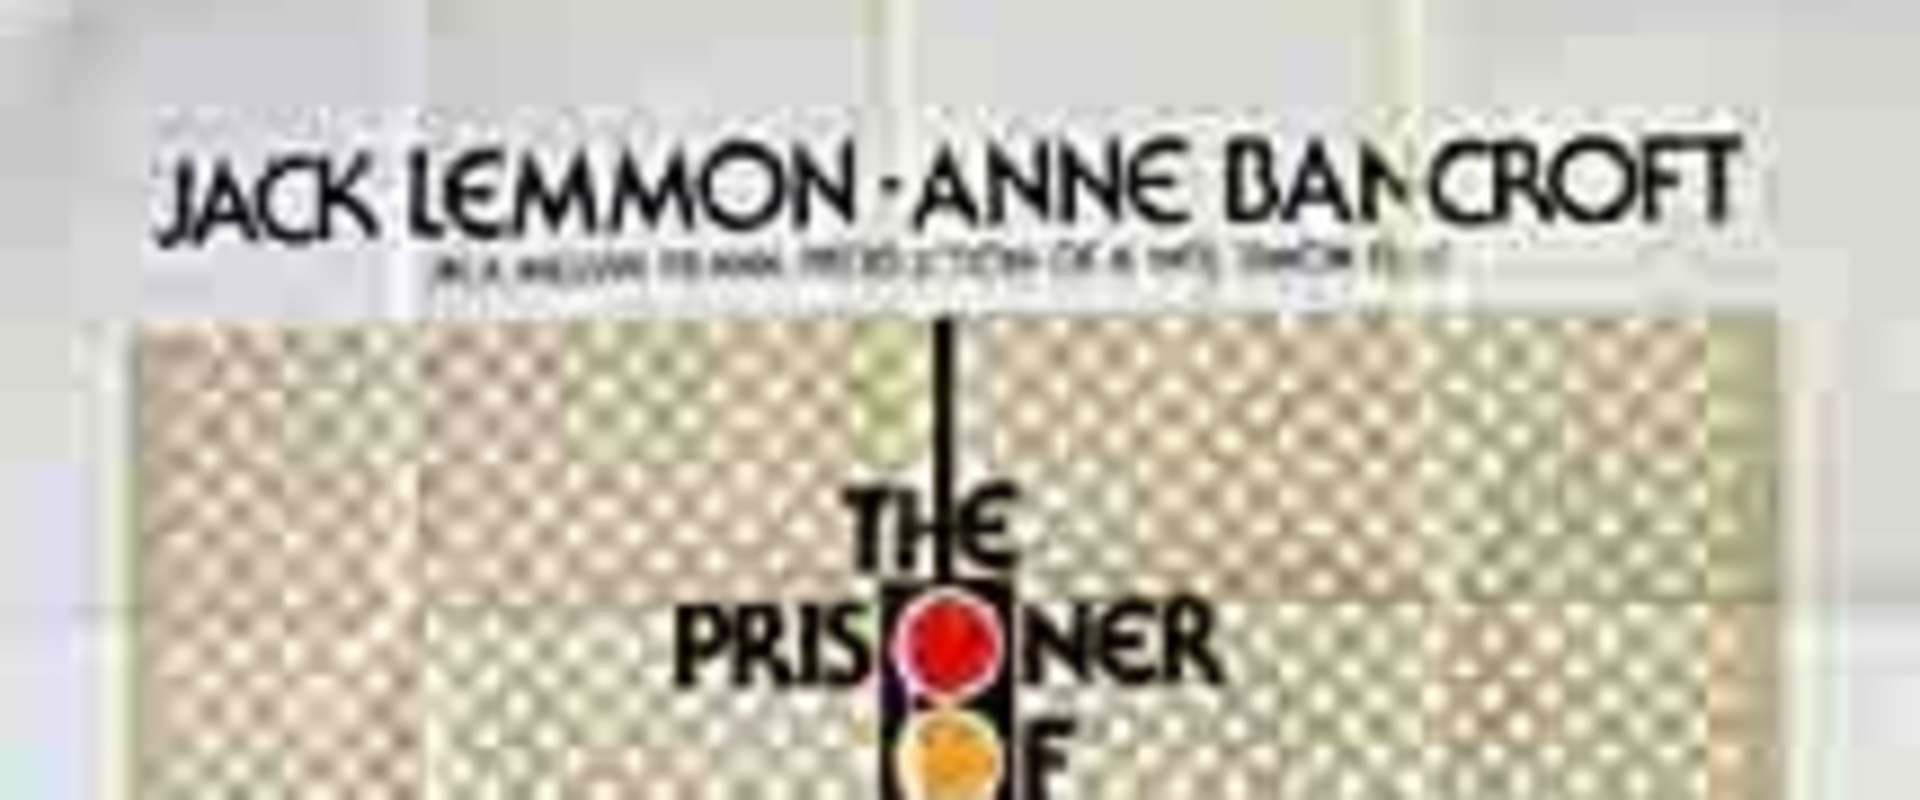 The Prisoner of Second Avenue background 2